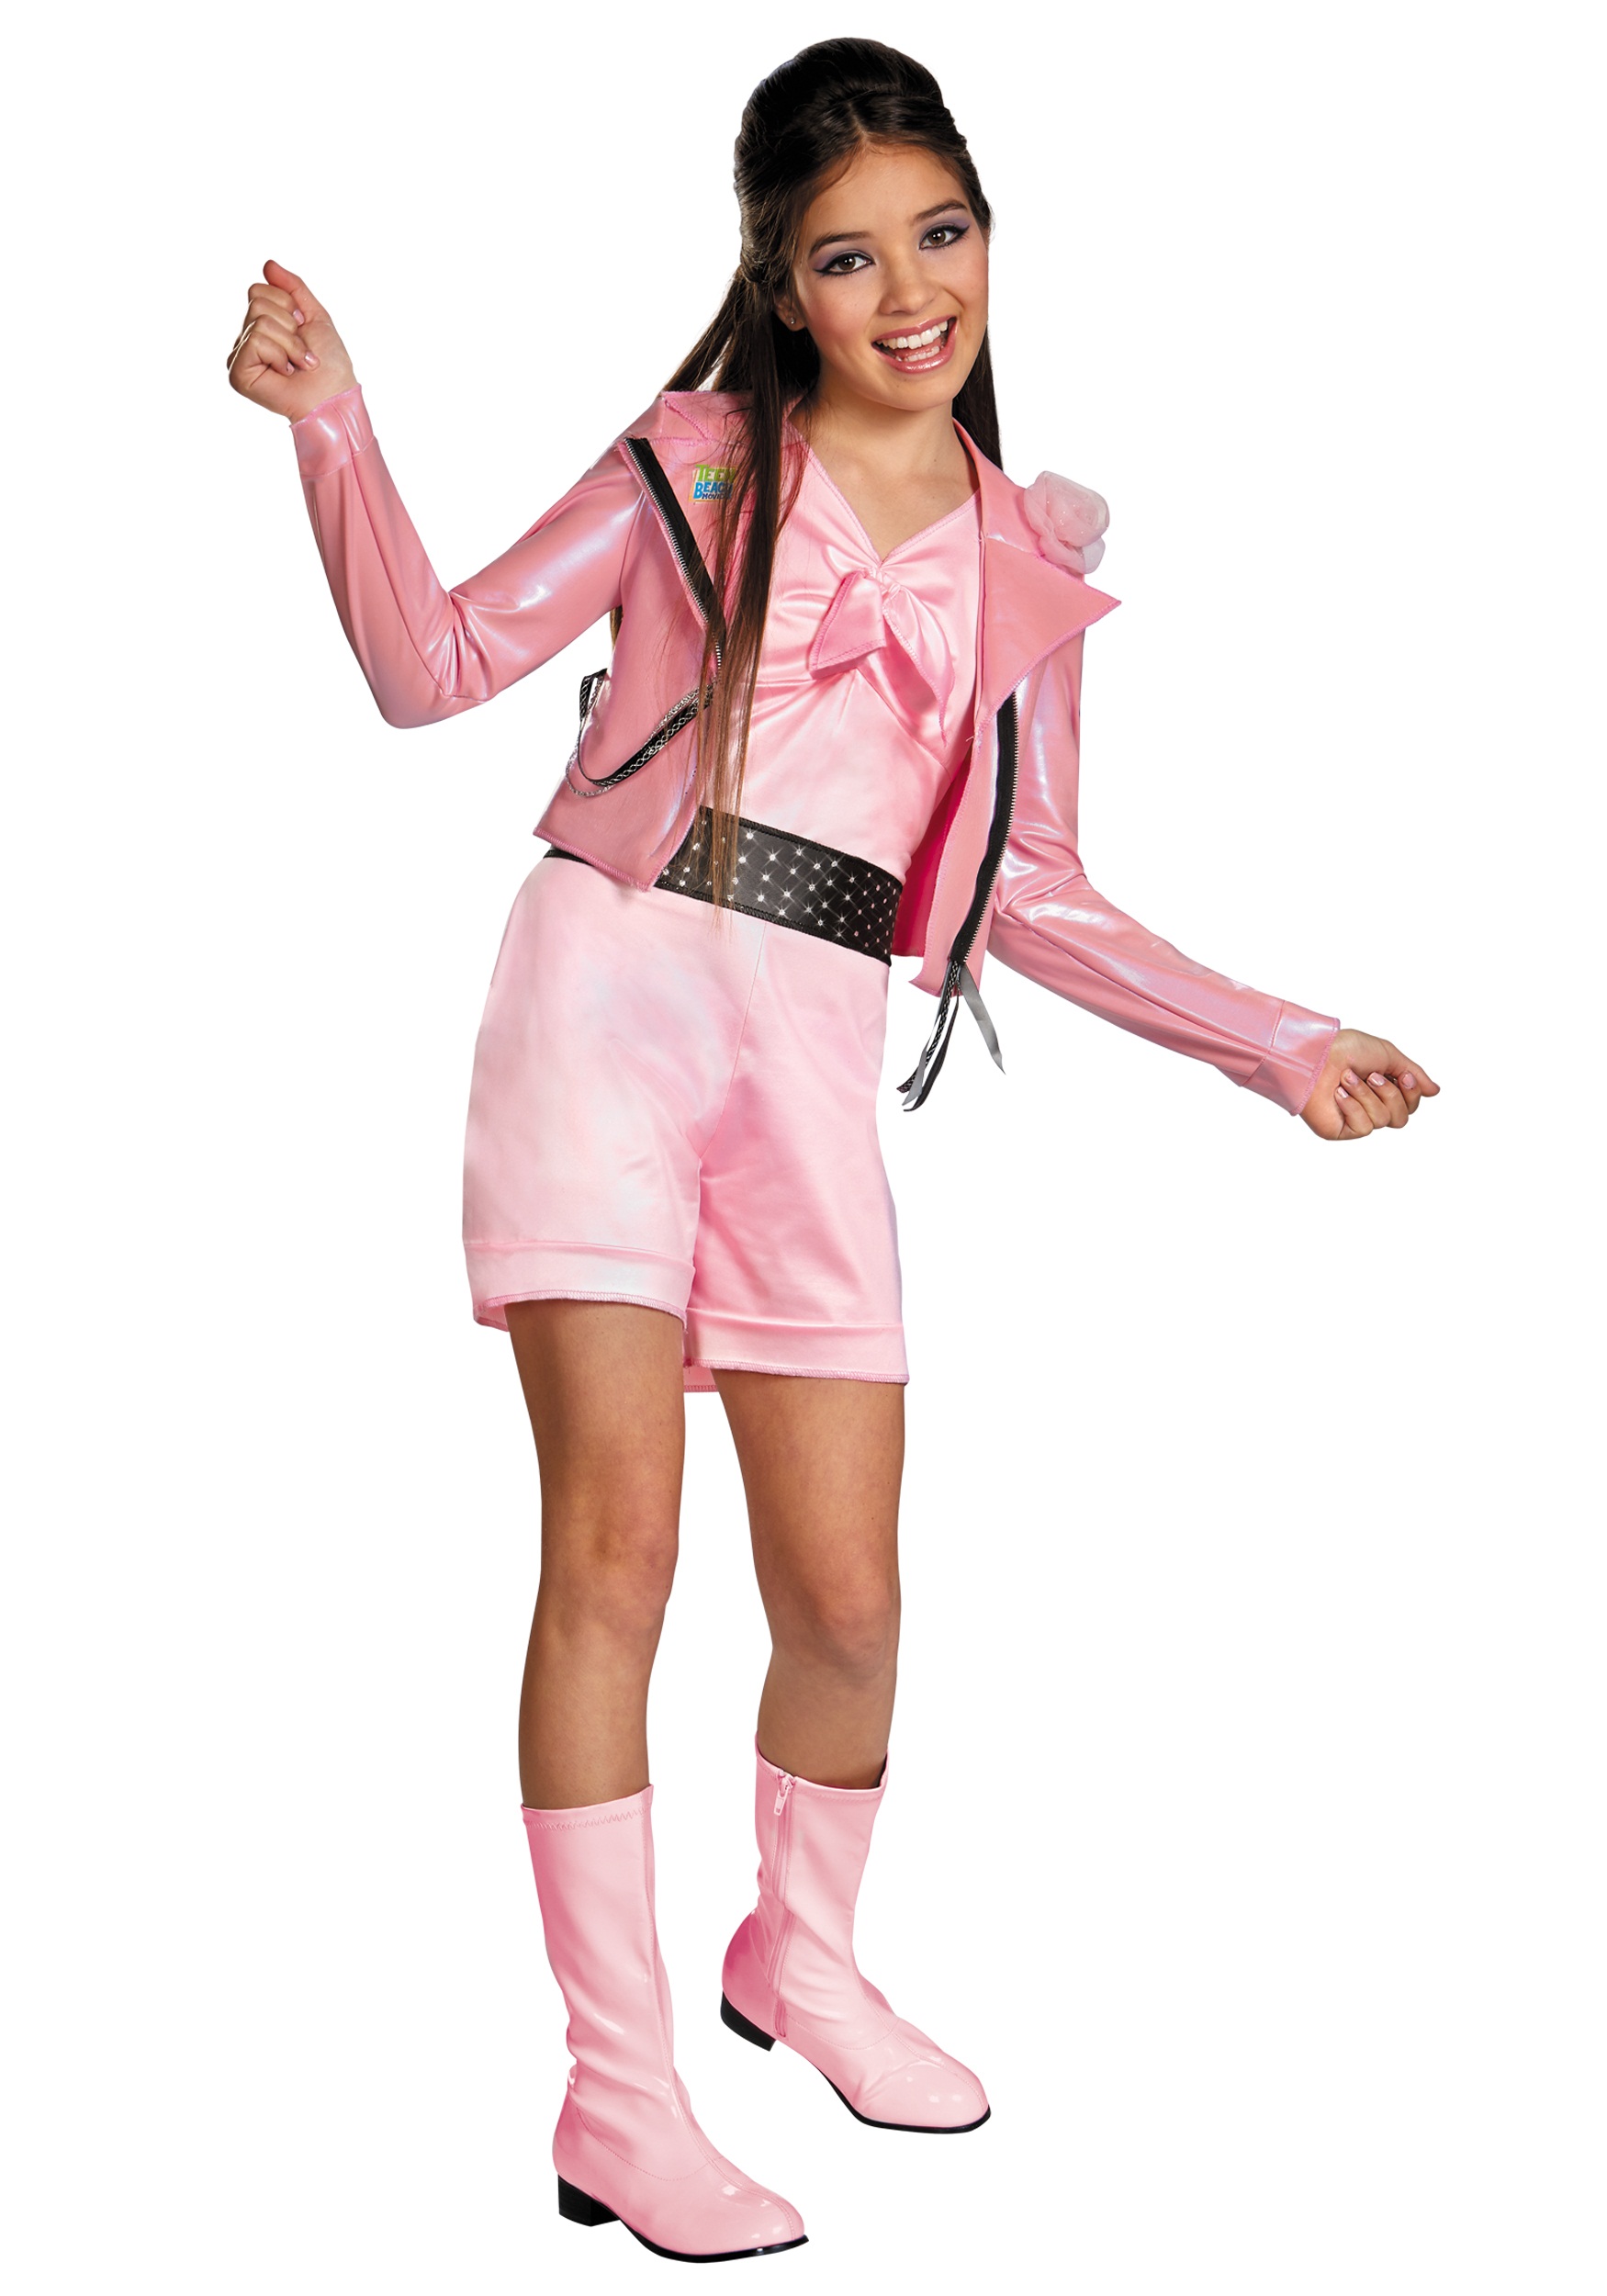 Girls Teen Beach Lela Biker Deluxe Costume | Girls Teen Beach Lela Bike...